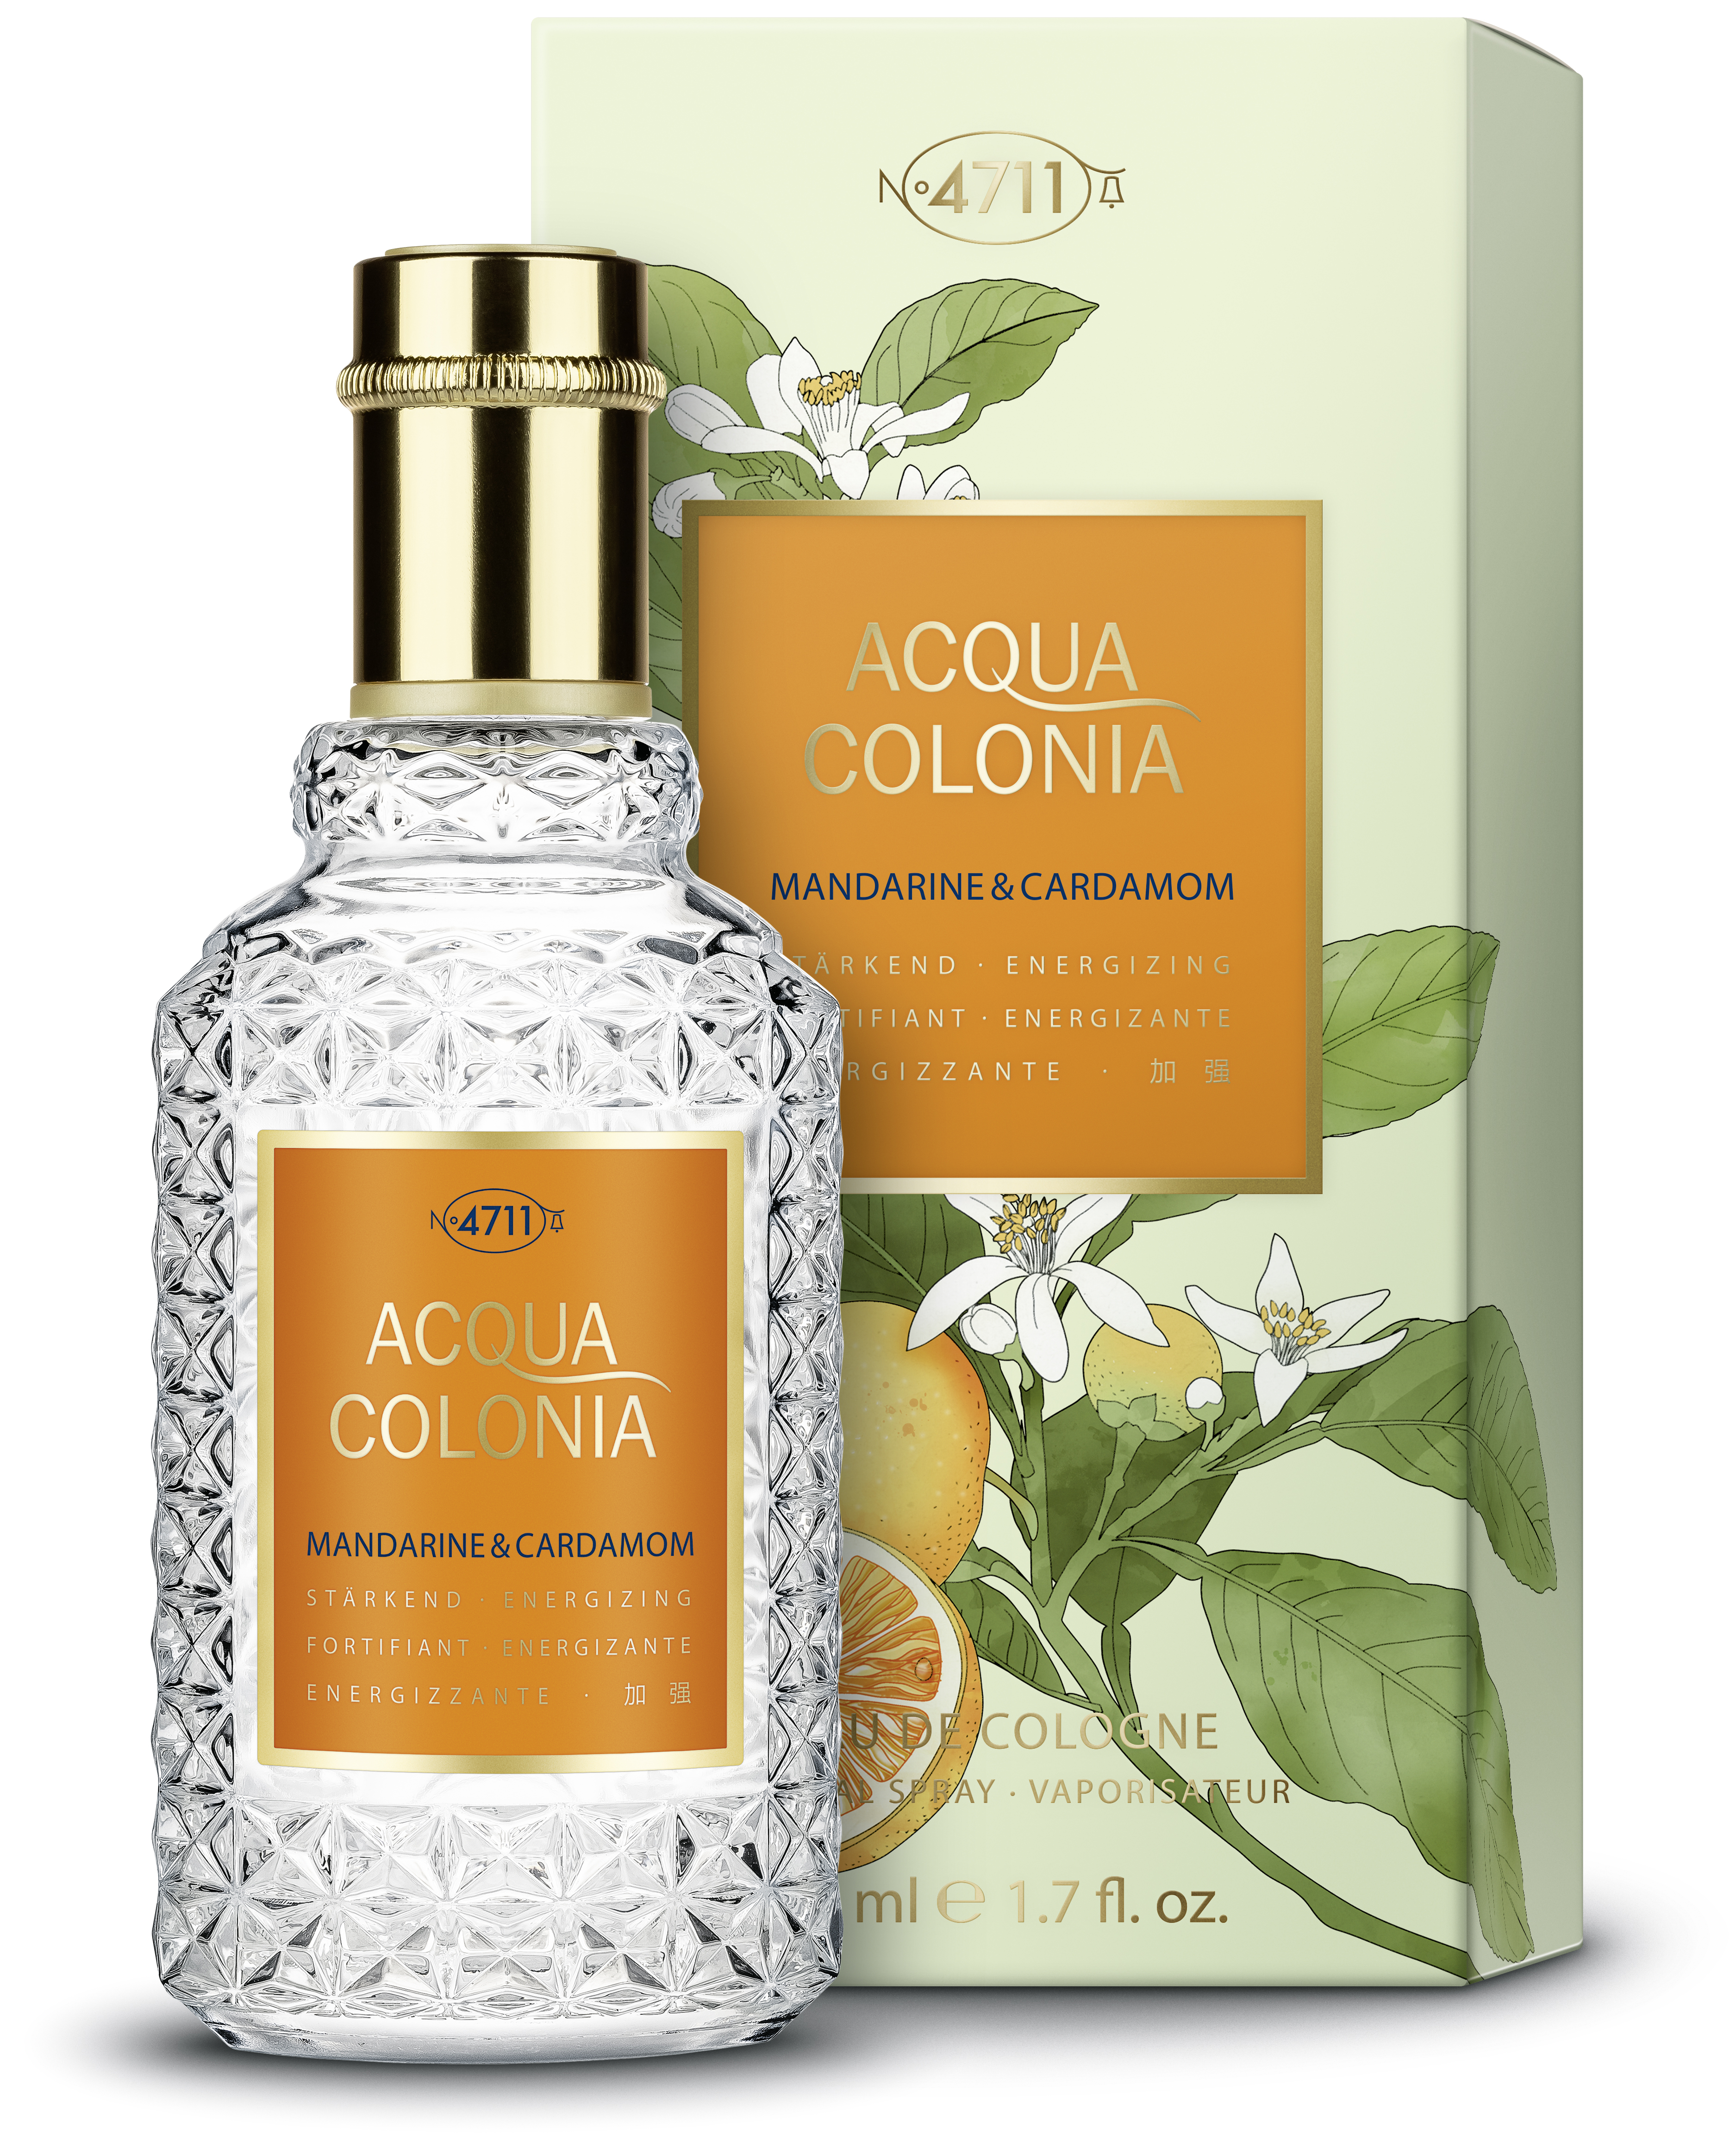 4711 Acqua Colonia Mandarine & Cardamon  Eau de Cologne unisex 50 ml